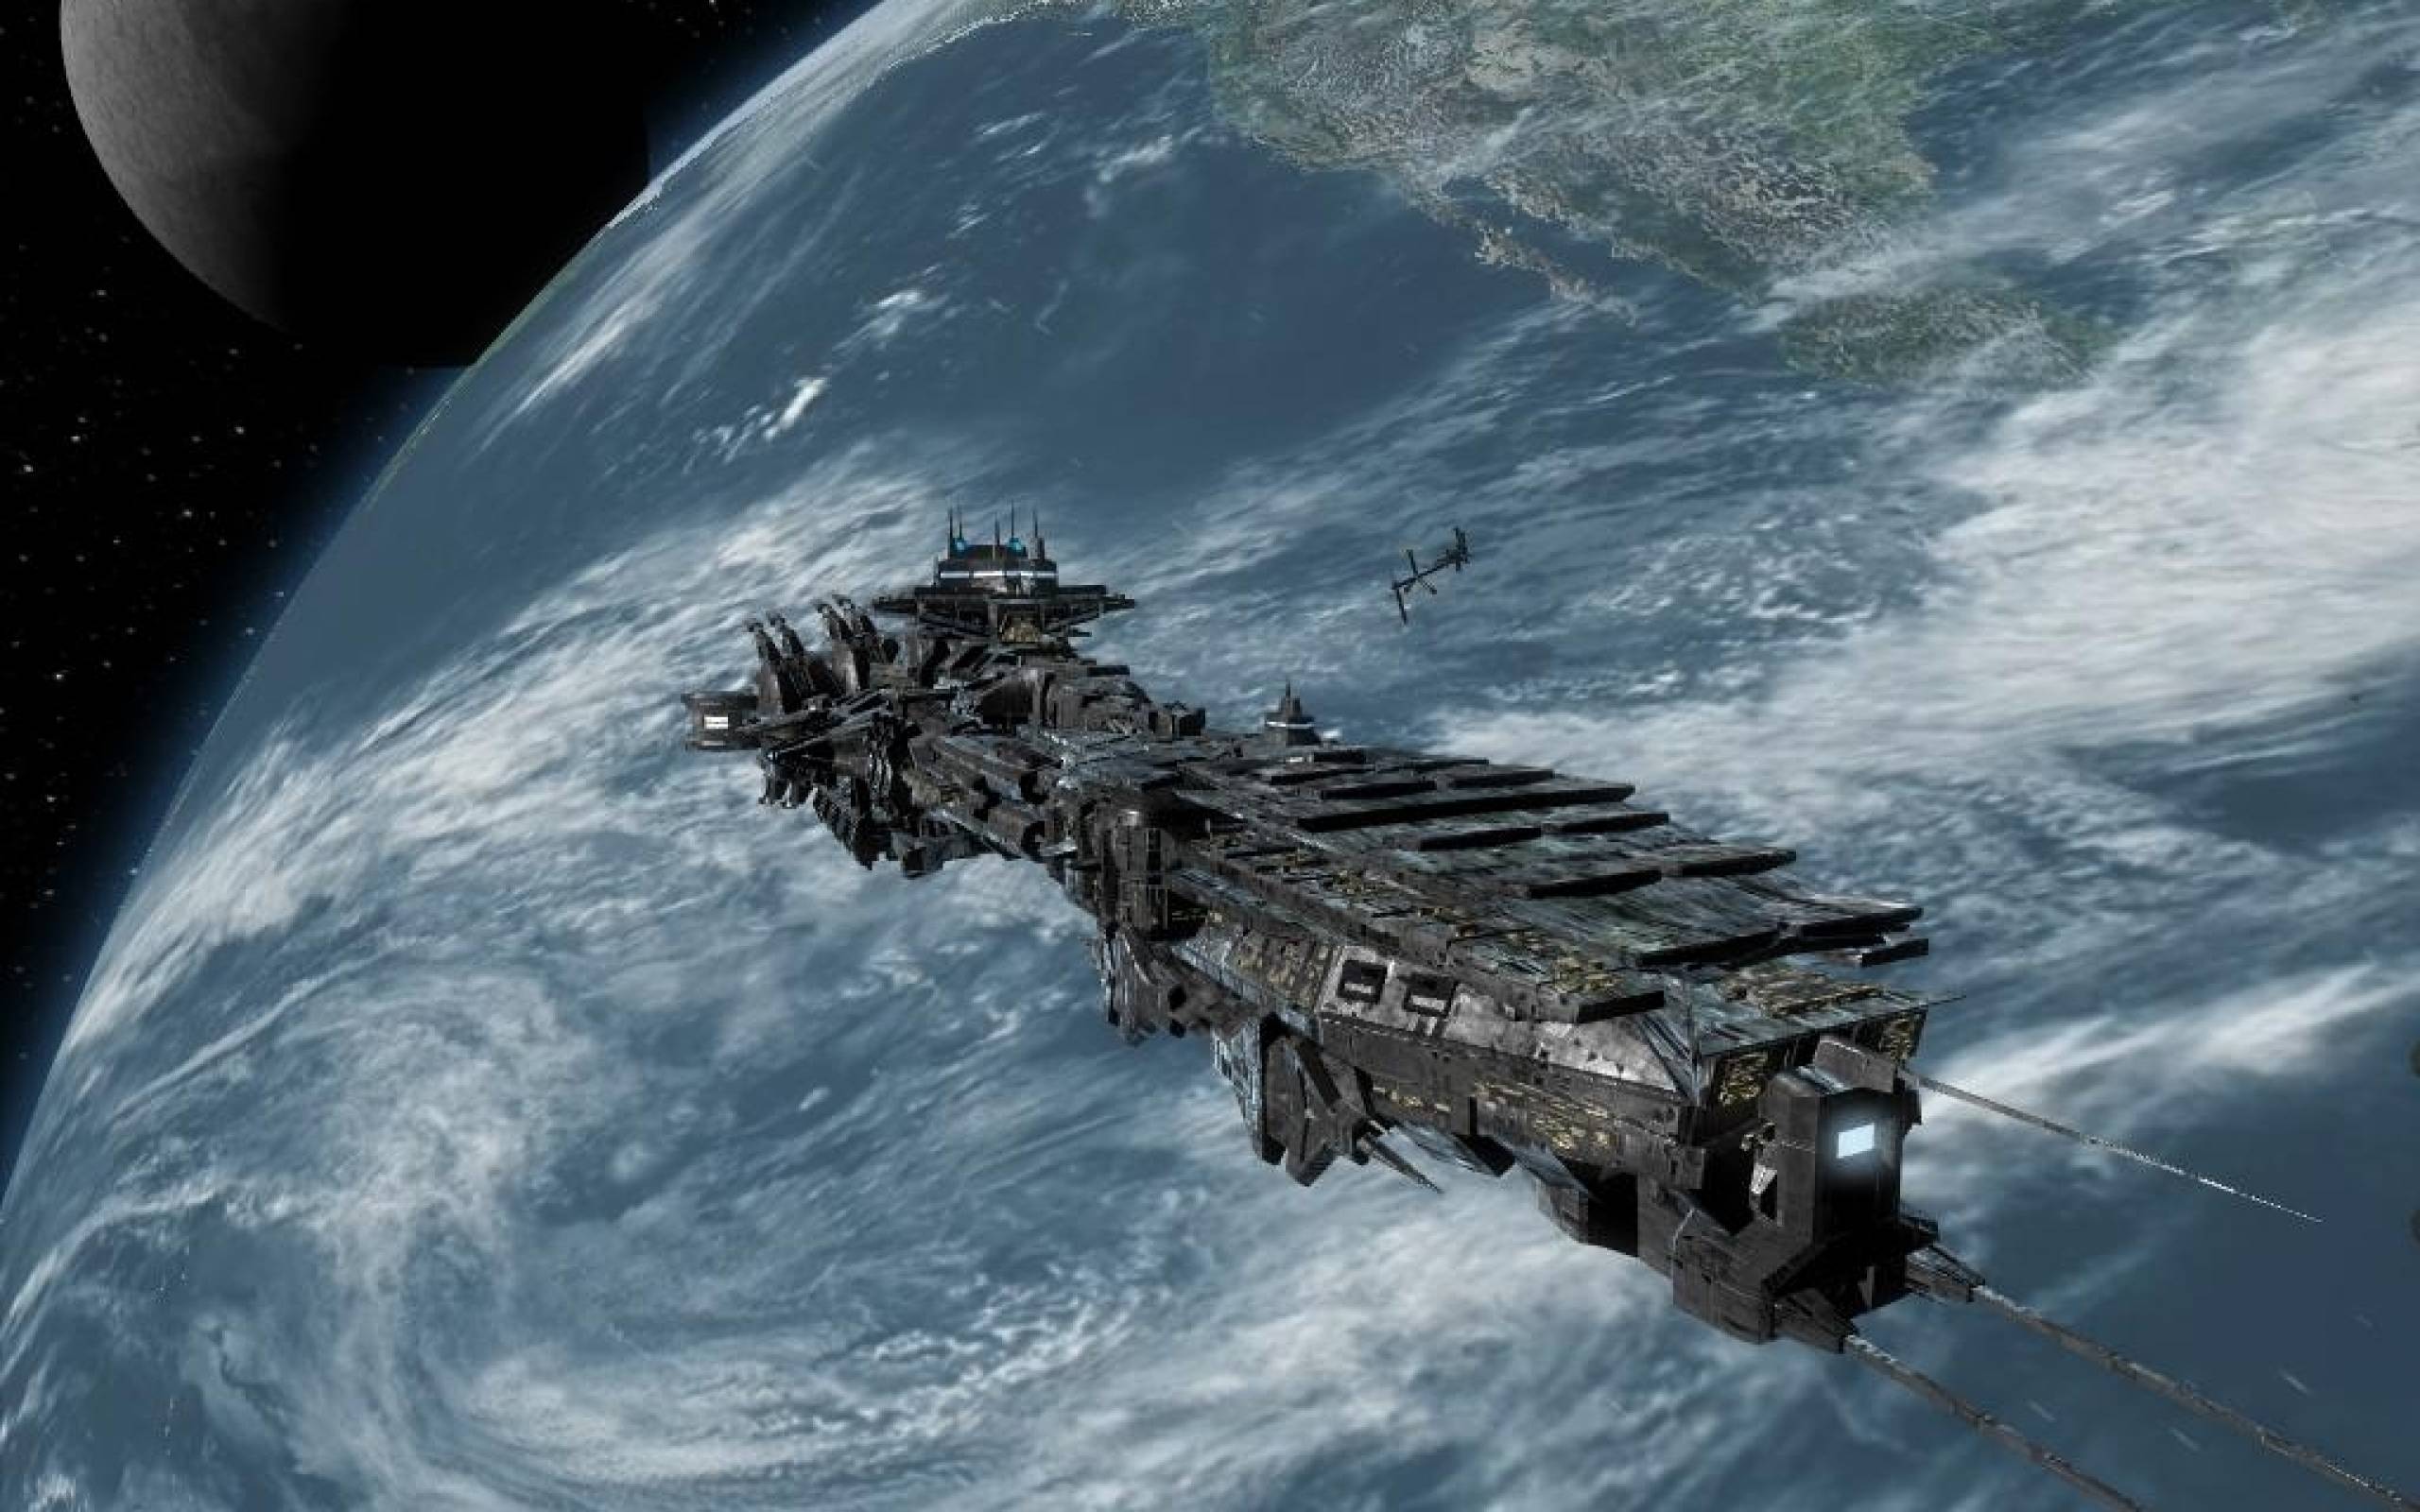 Sci Fi Wallpaper Spaceship 2560x1600PX Wallpaper